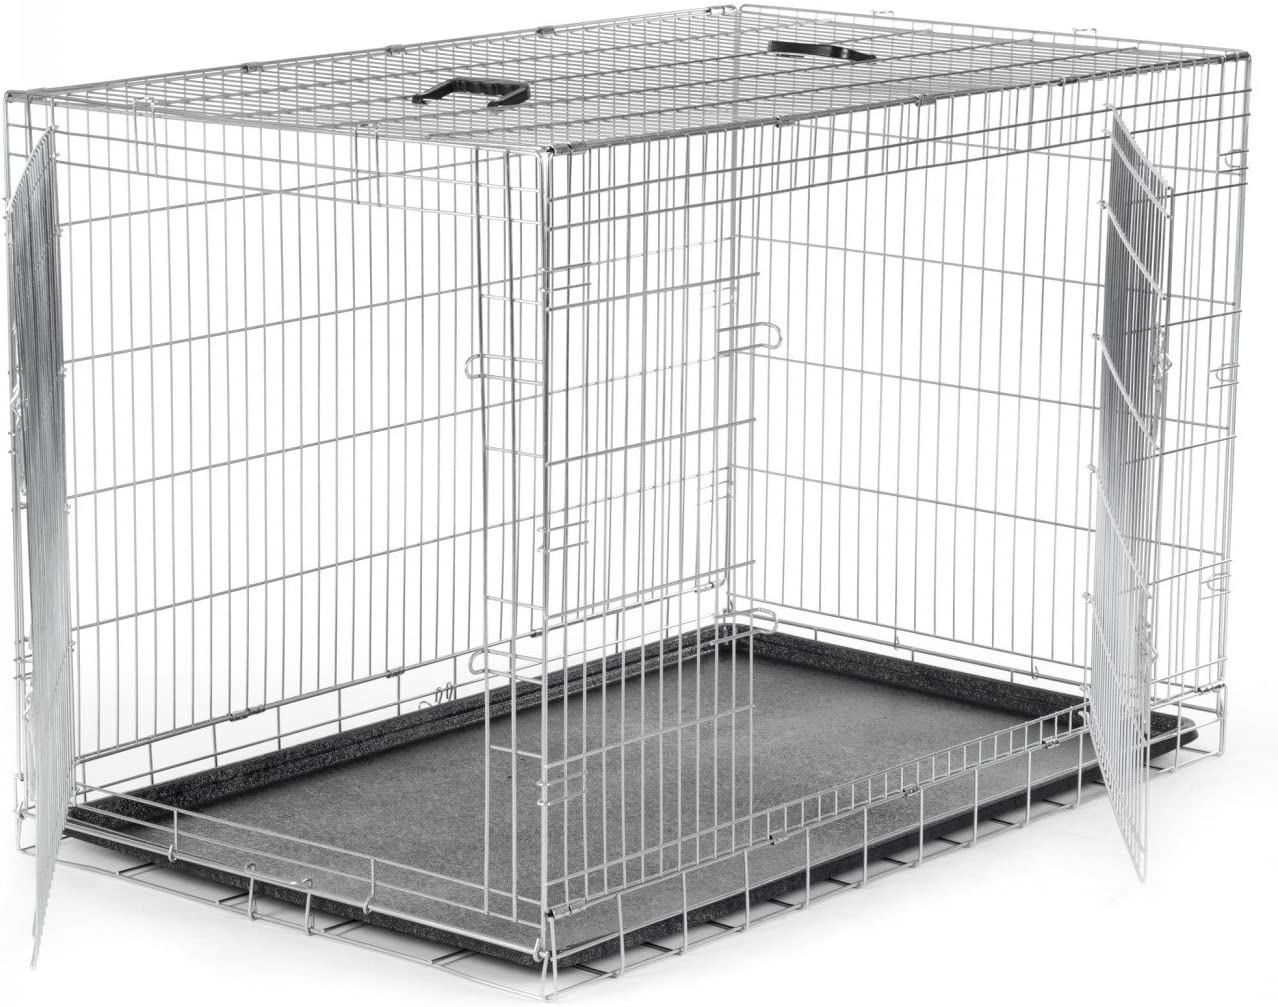  zoomundo Portador Jaula Plegable Metálica para Mascotas para Perros Gatos Tamaño XXL (2 Puertas) 